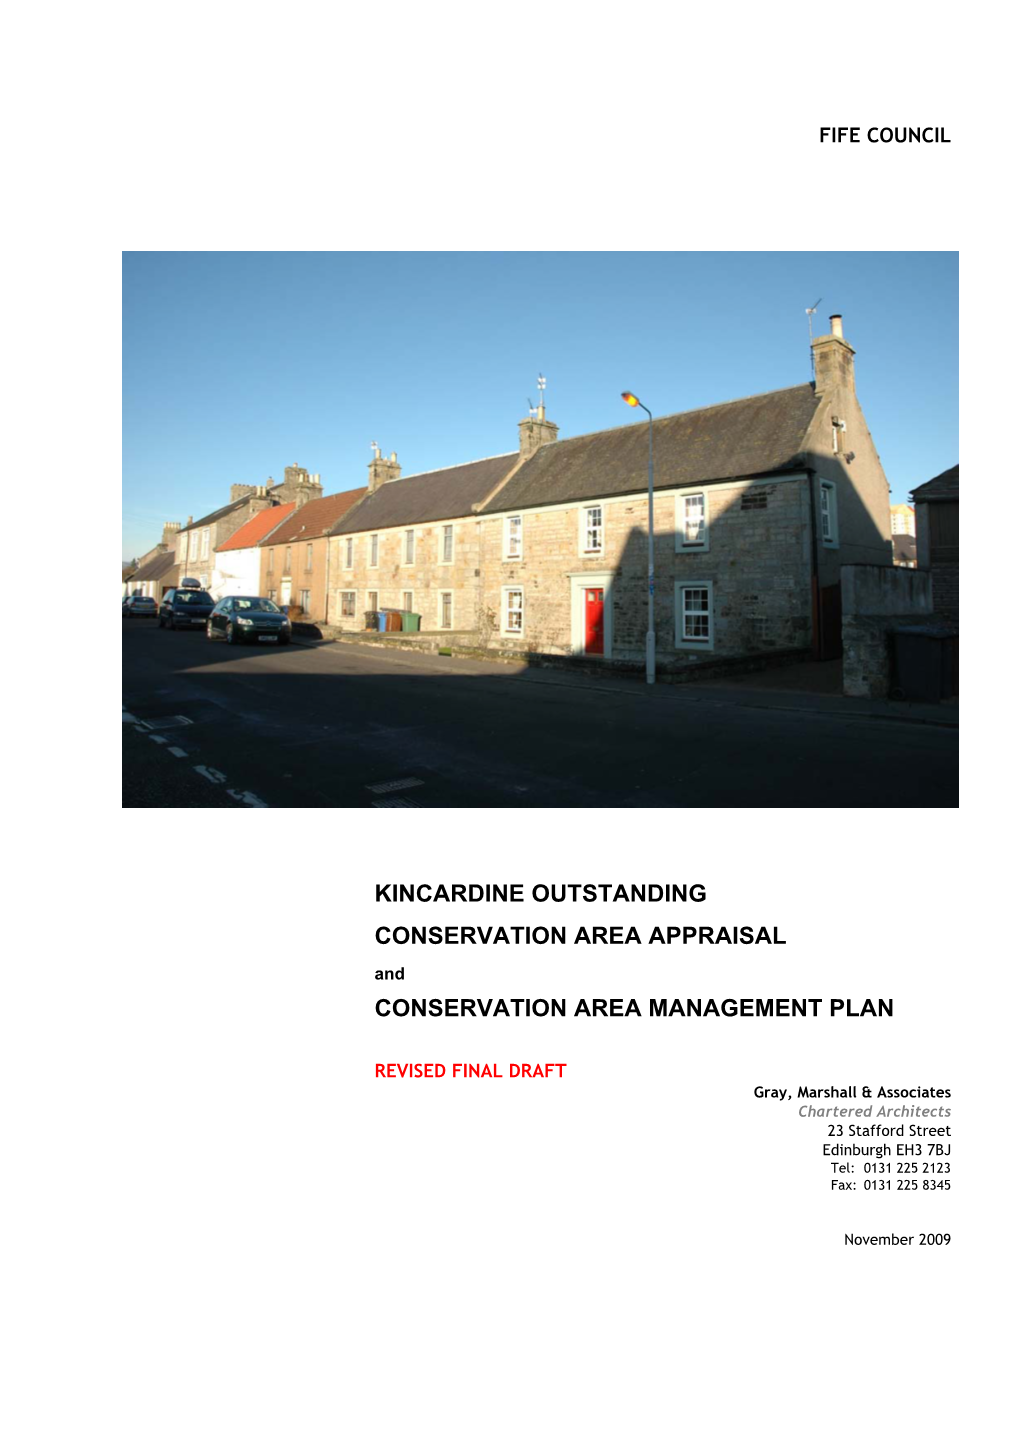 Kincardine Conservation Area Appraisal and Management Plan